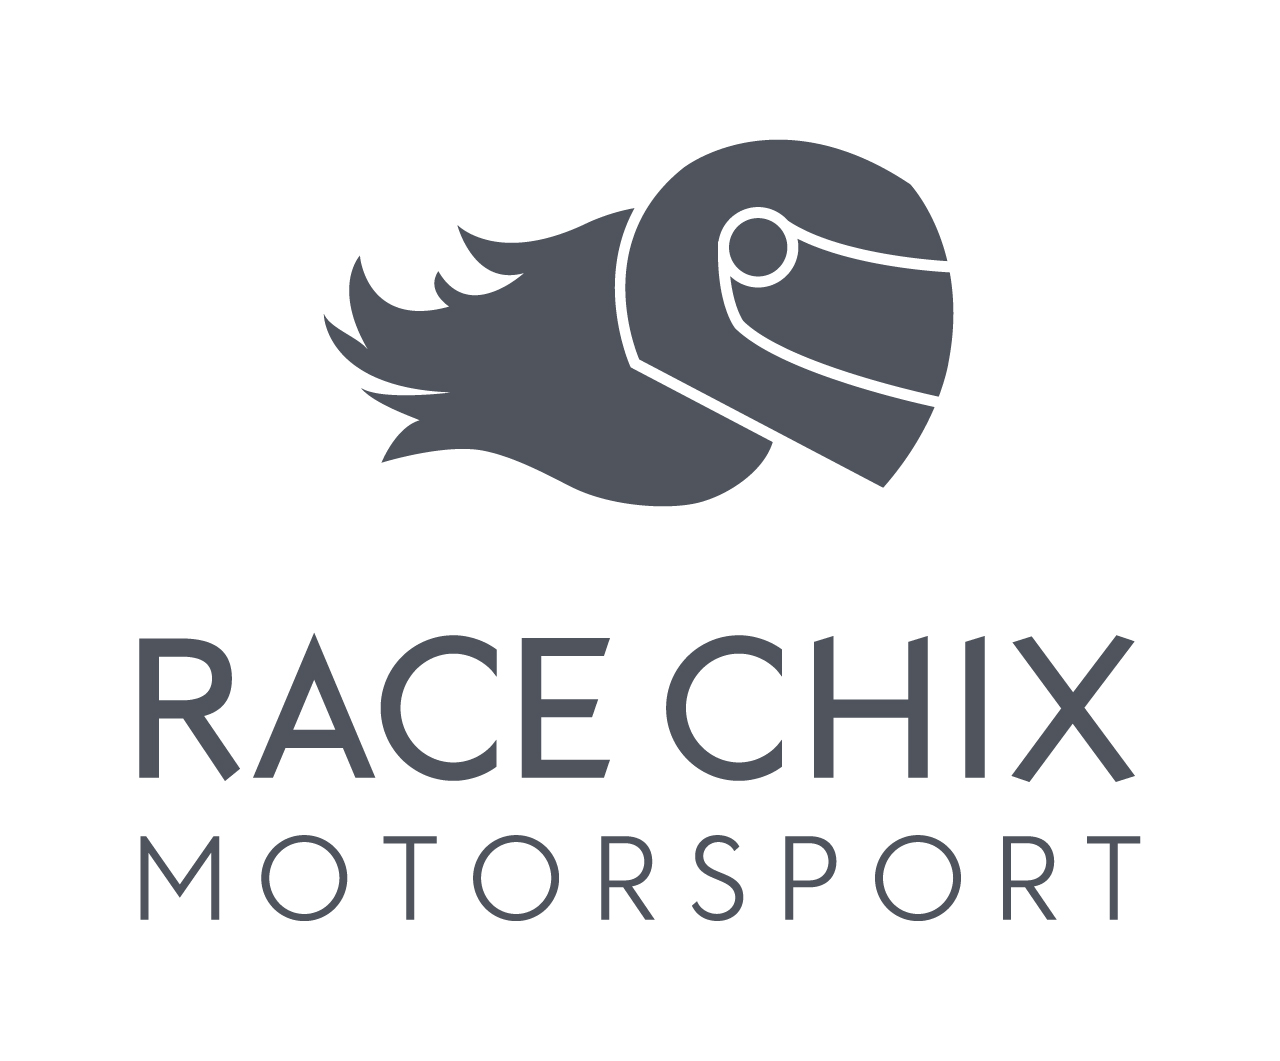 Race Chix Motorsport